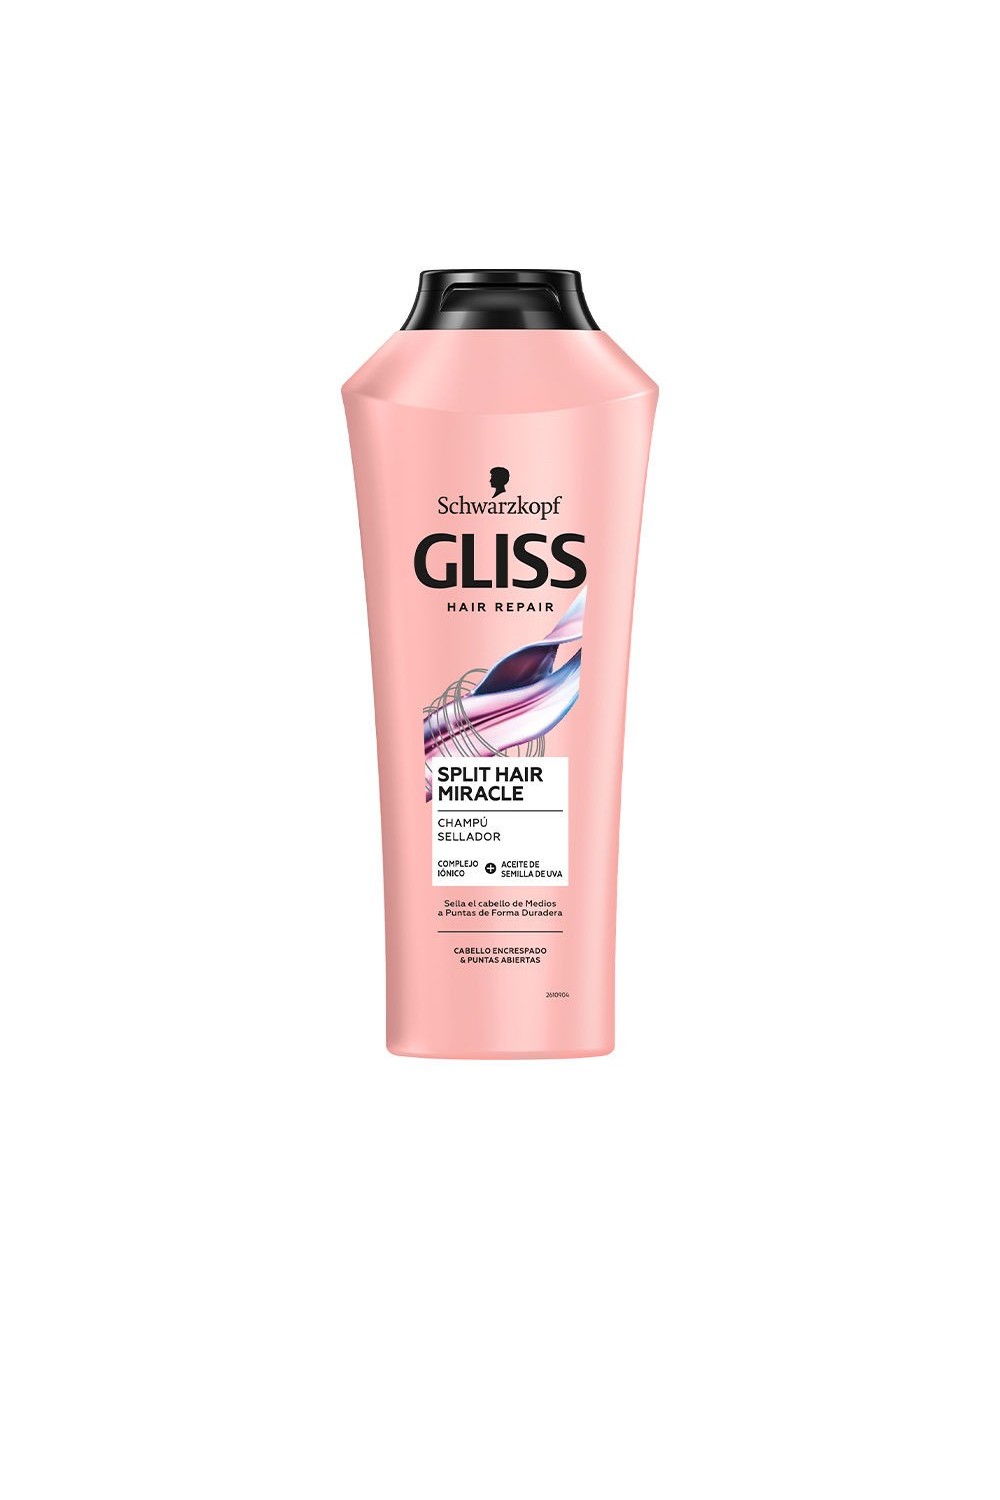 Schwarzkopf Gliss Hair Repair Sealing Shampoo 370ml